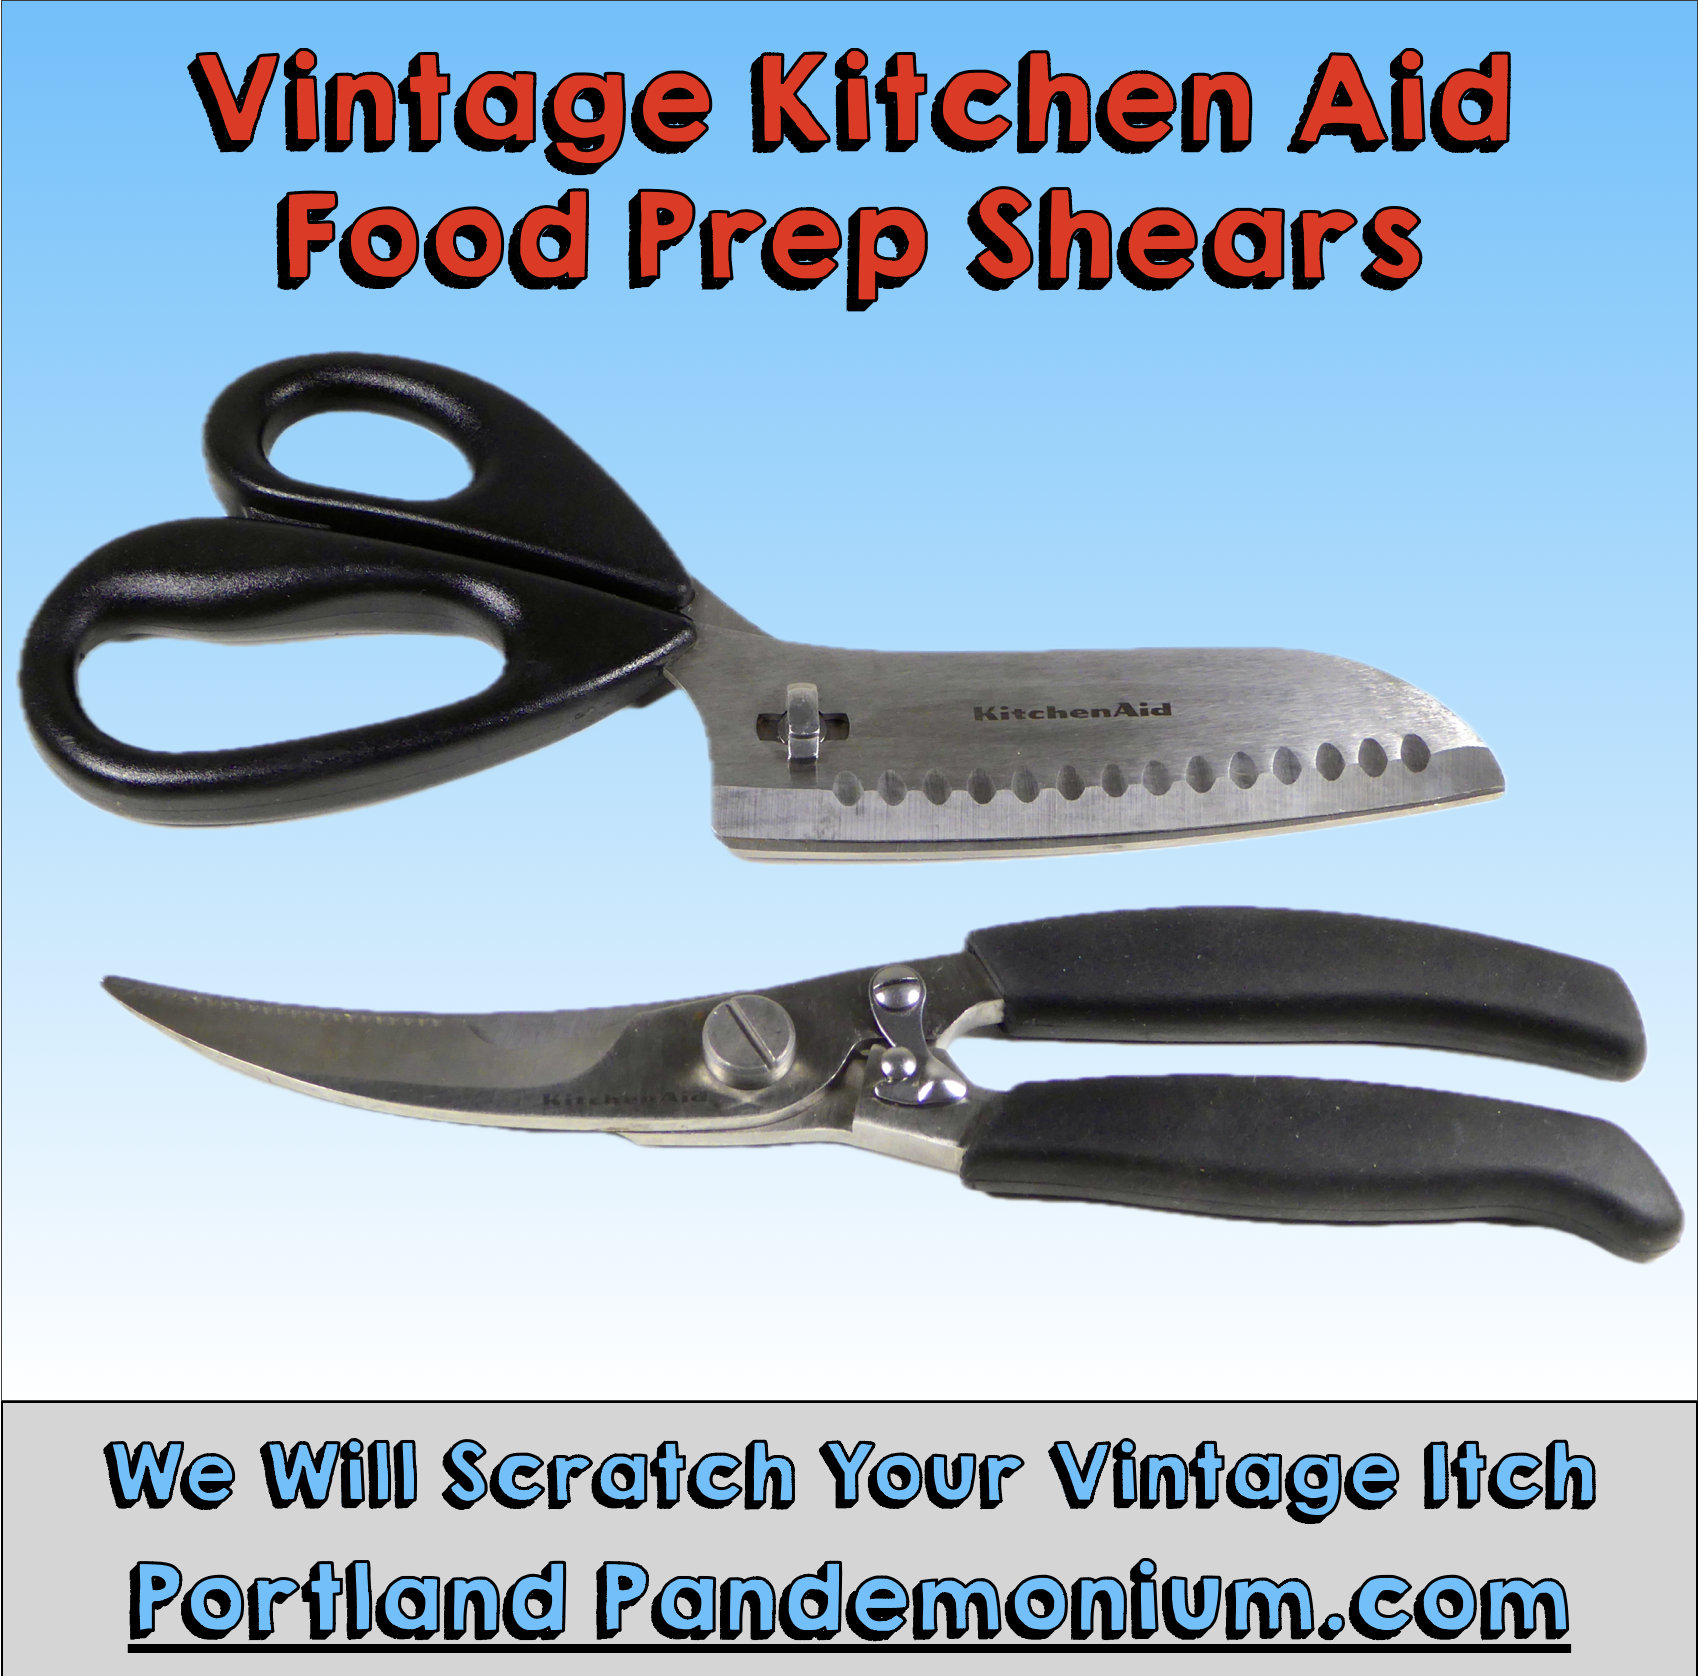 Vintage Kitchenaid Food Prep Shears, 9 Poultry Shear & 9 Utility